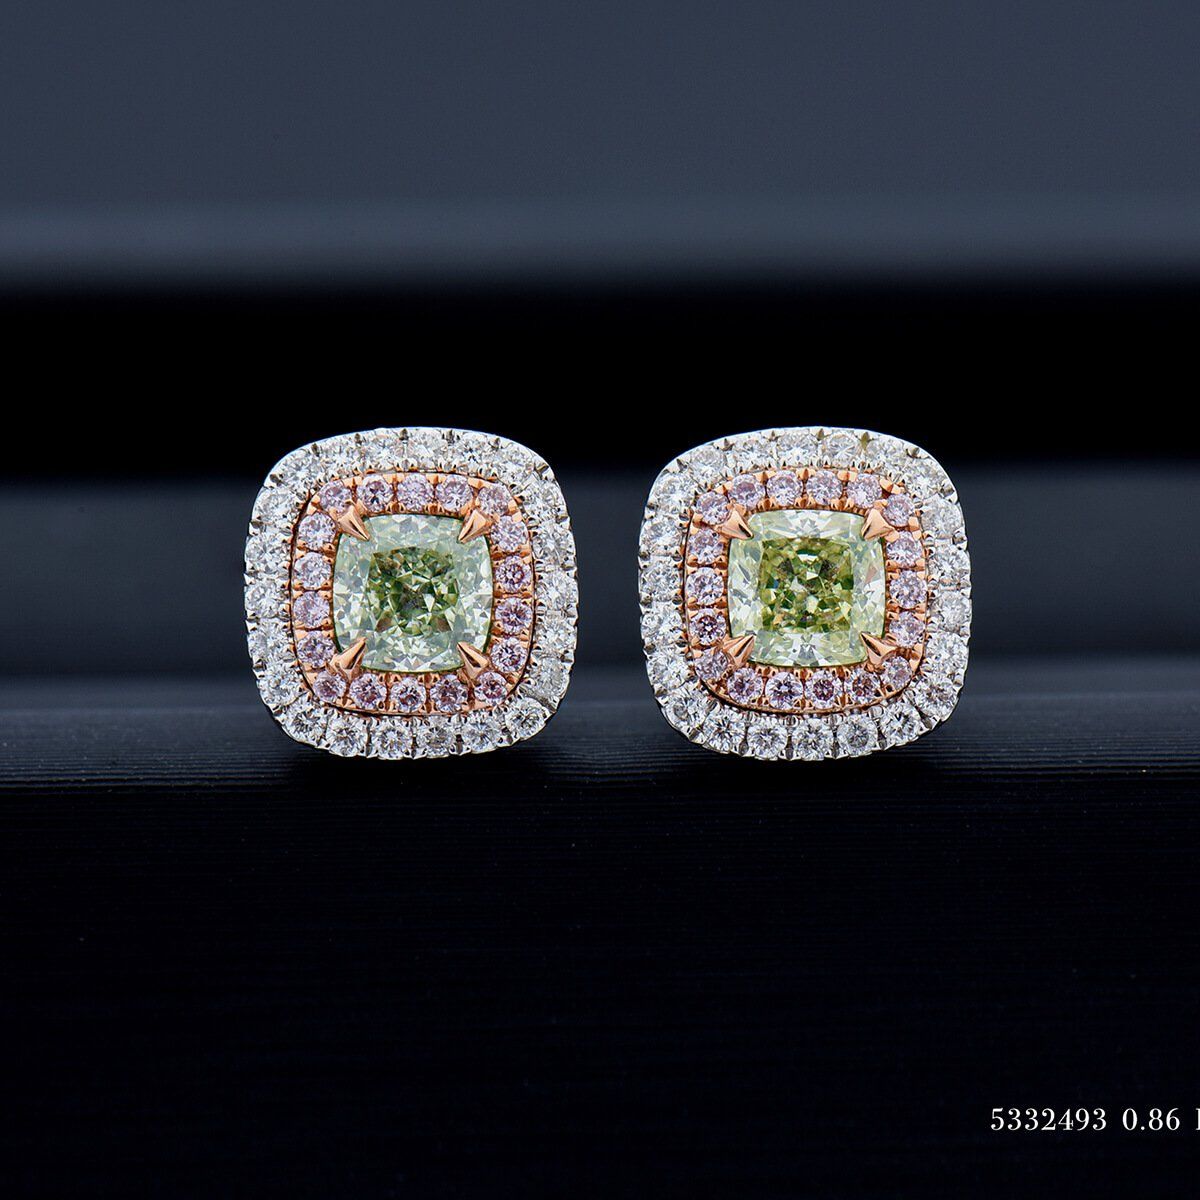 Light Greenish Yellow Diamond Earrings, 0.86 Ct. (1.25 Ct. TW), Cushion shape, GIA Certified, JCEF05332493